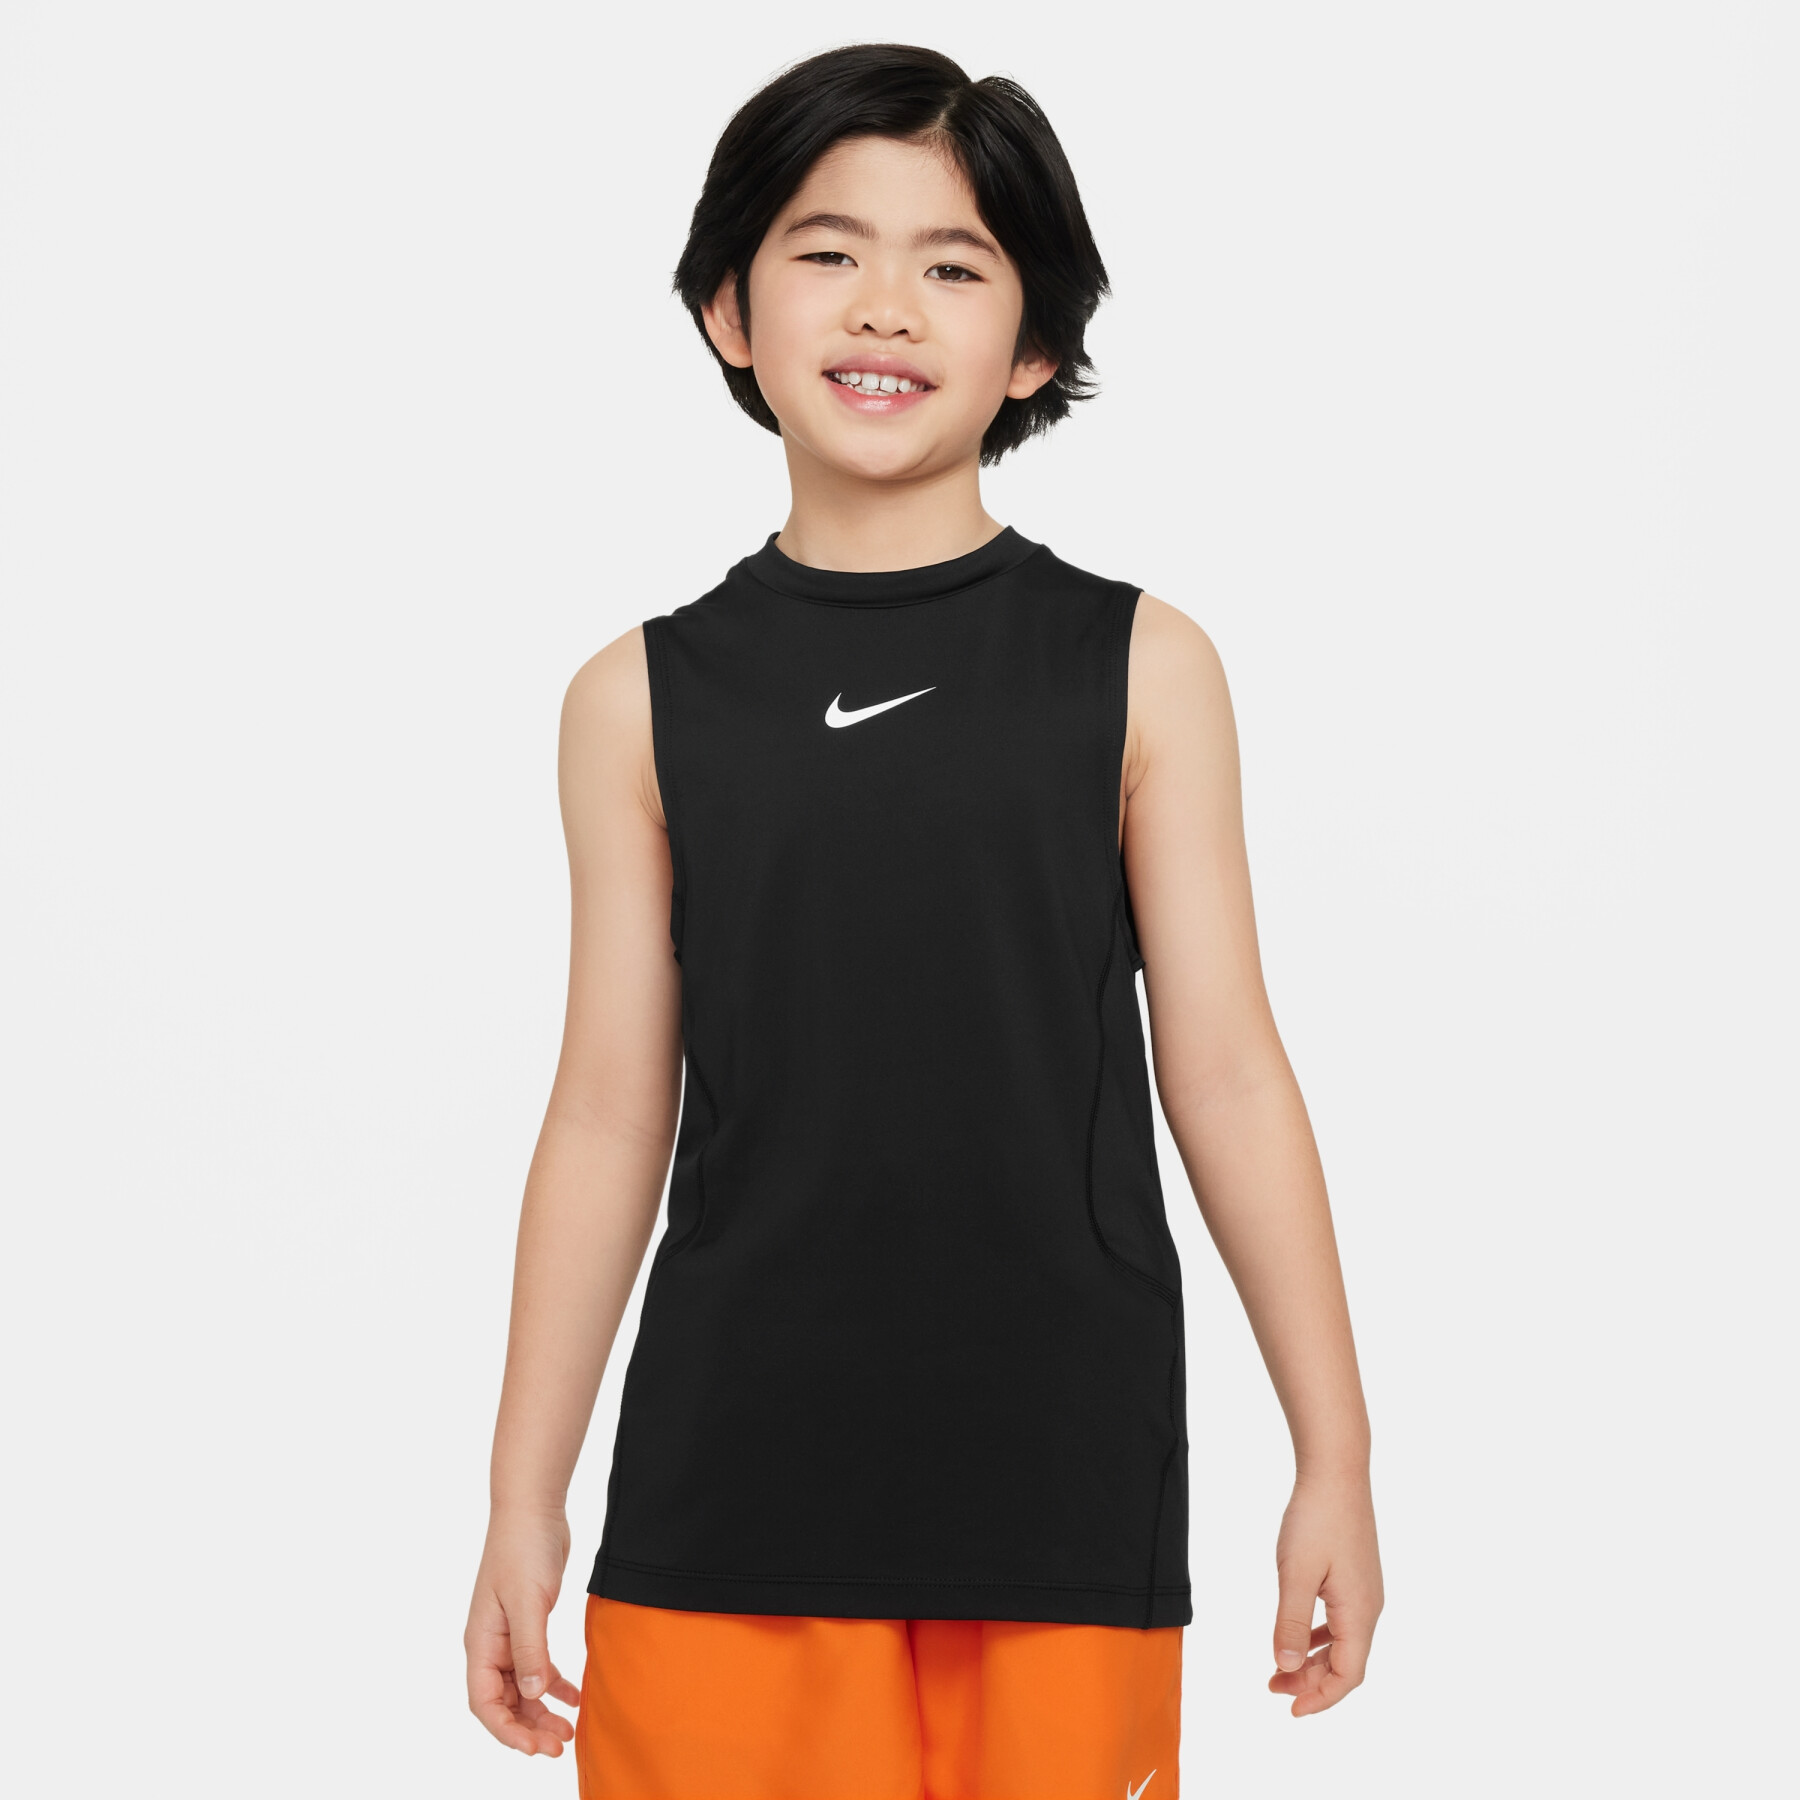 Children's tank top Nike Pro